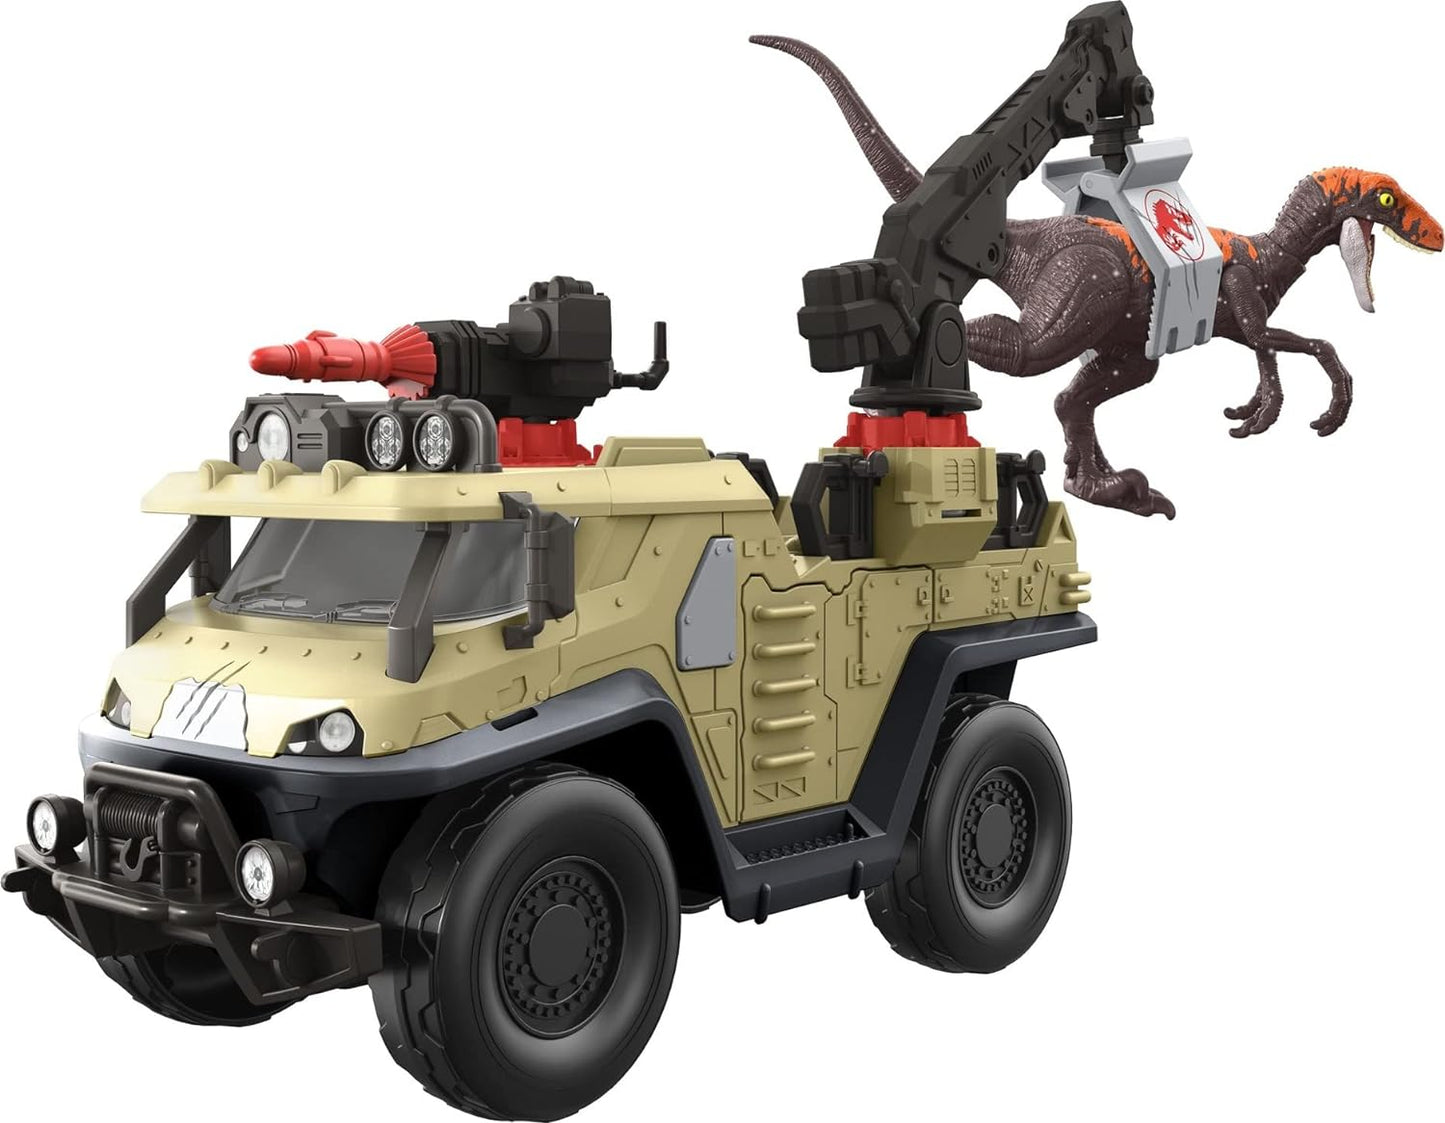 Jurassic World Toys Dominion Capture & Crush Truck with Velociraptor, Vehicle Toy with Tranq Shooter, Crane & 2 Breakaways, Large